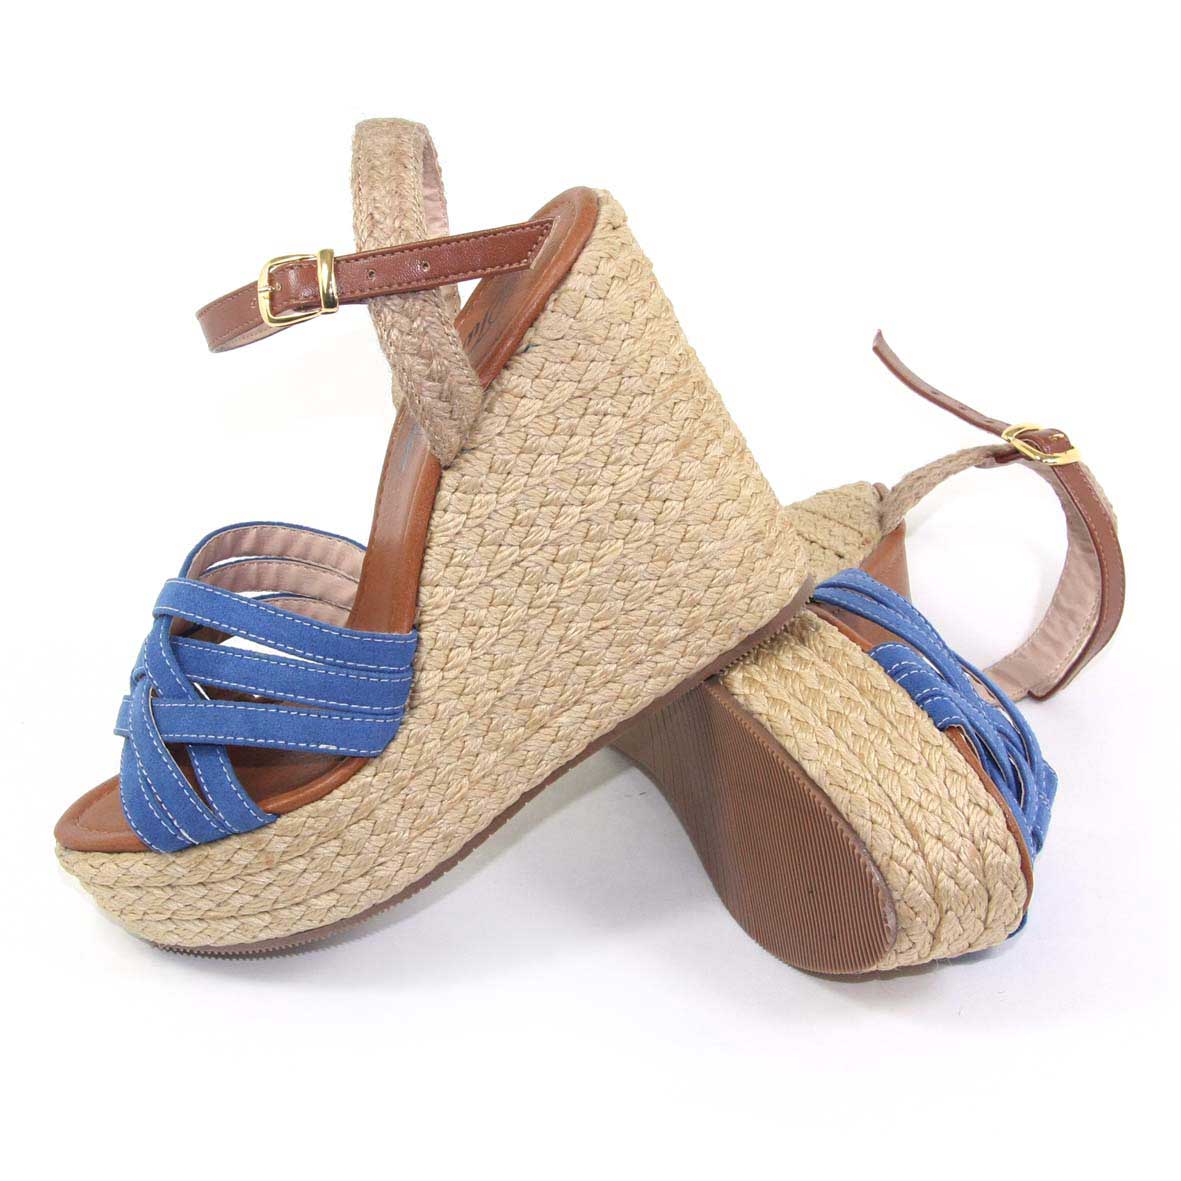 Sandalias con tacón de plataforma color azul